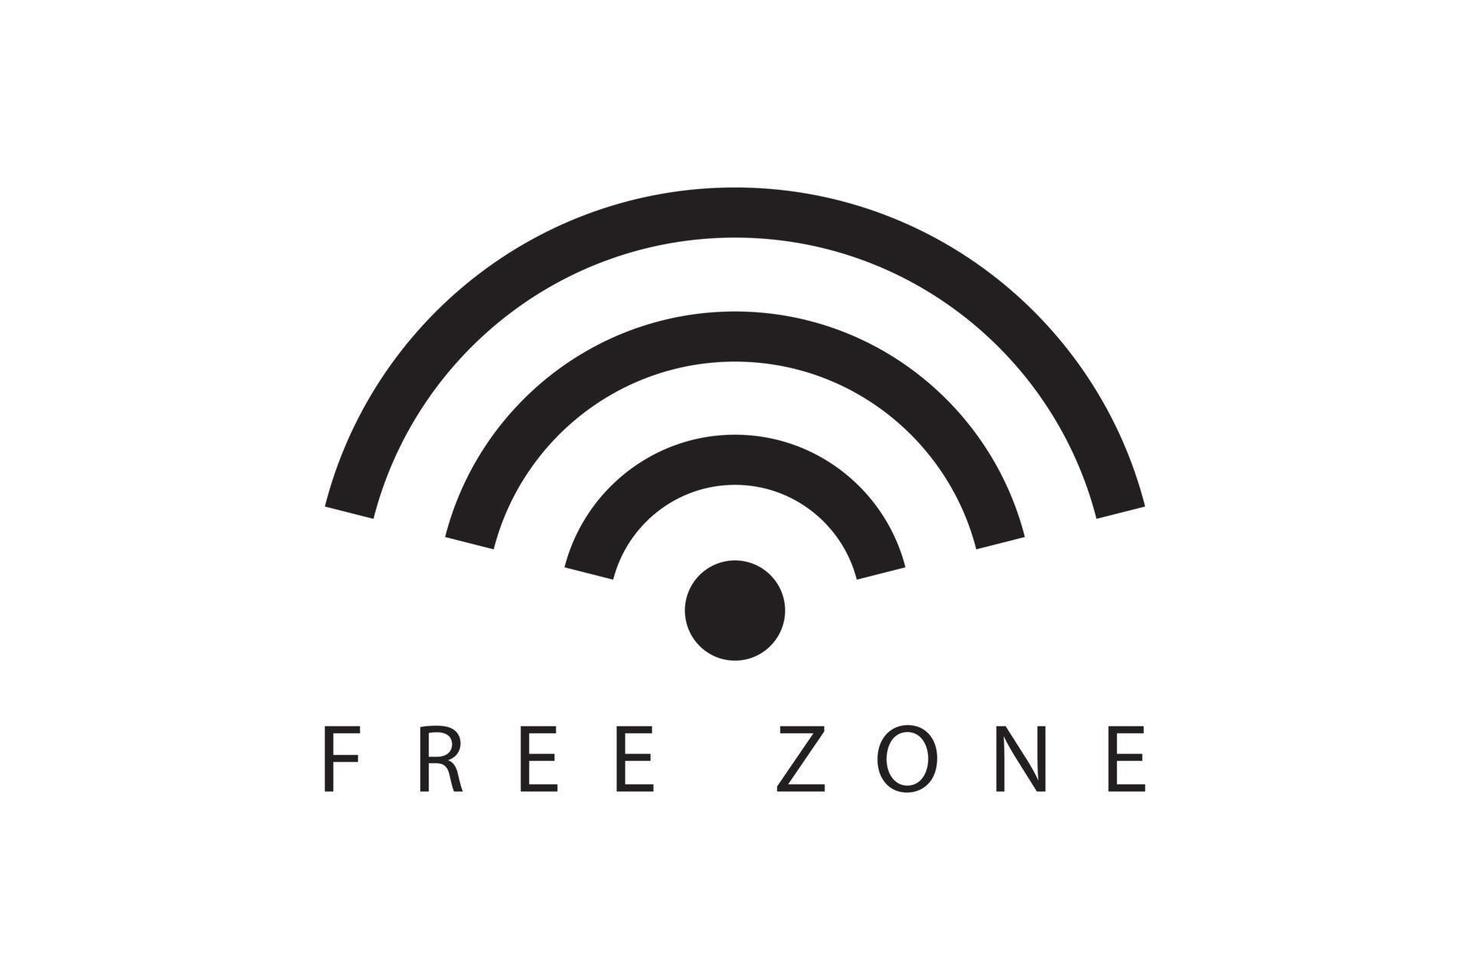 Wifi free zone symbol. Wireless signal sign. Mobile internet vector icon.